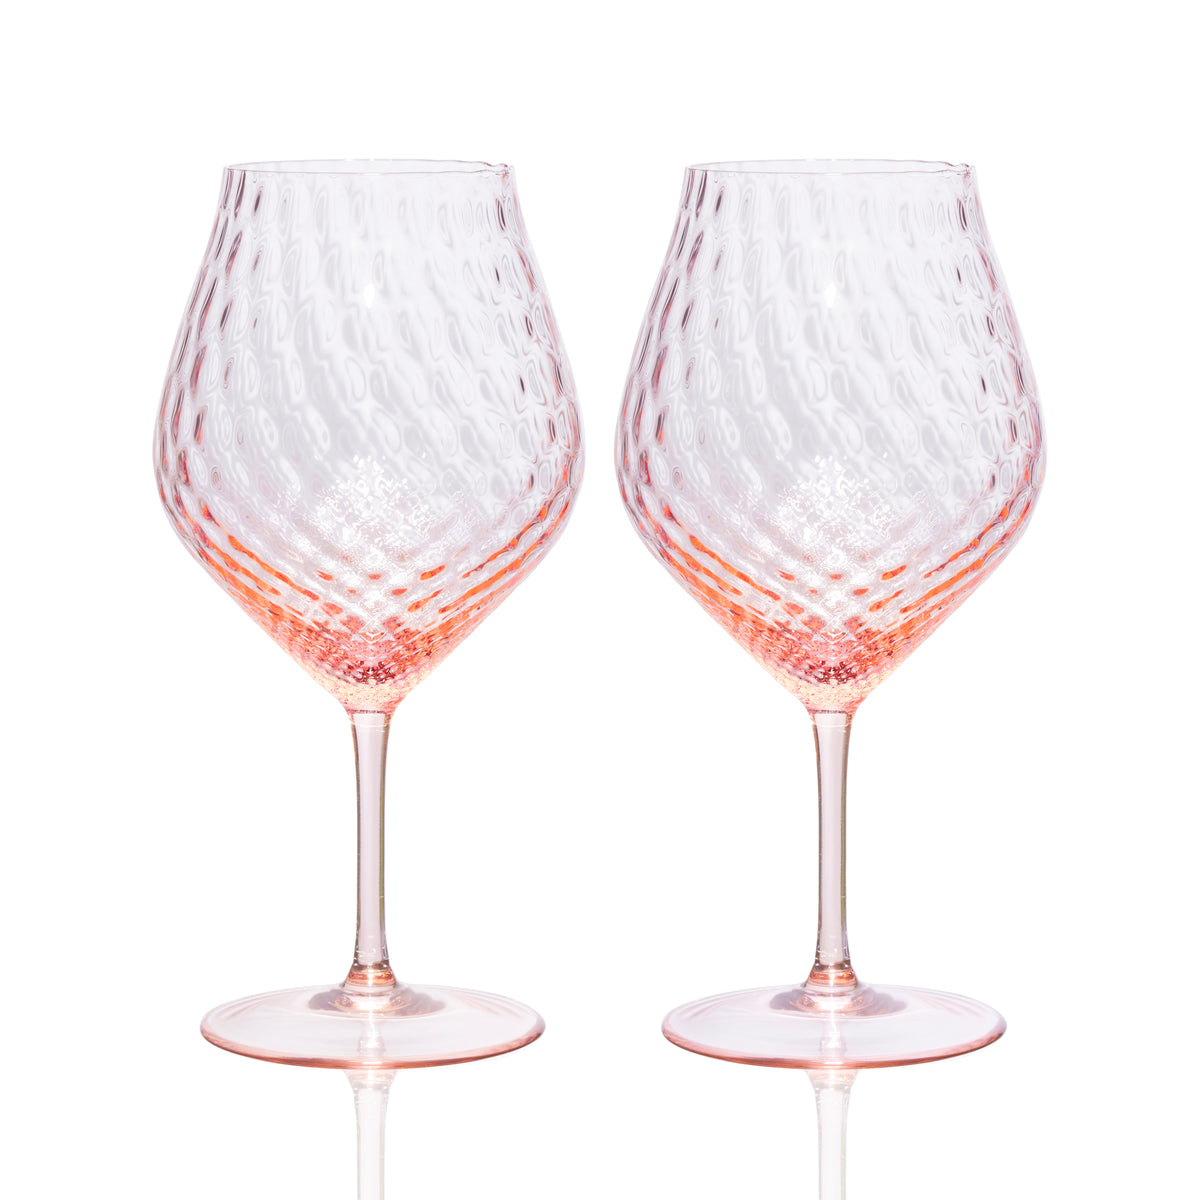 Phoebe rose pink crystal tulip universal wine glasses from Caskata.